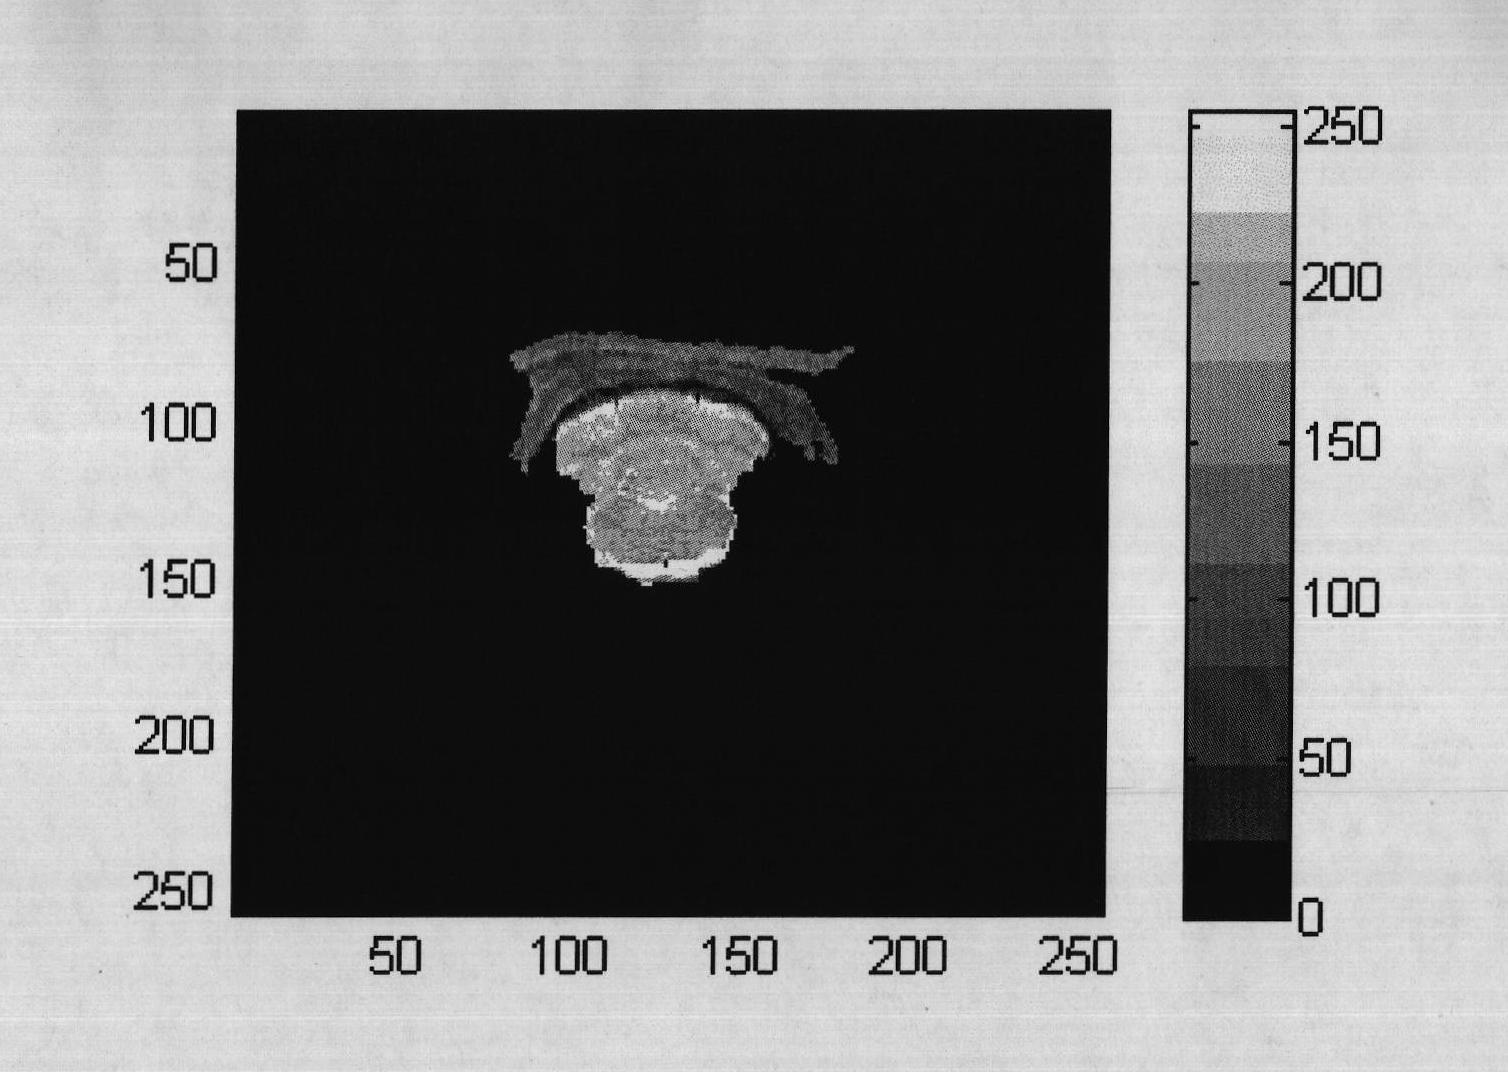 Obtaining method of rat head magnetic resonance image Monte Carlo simulation model